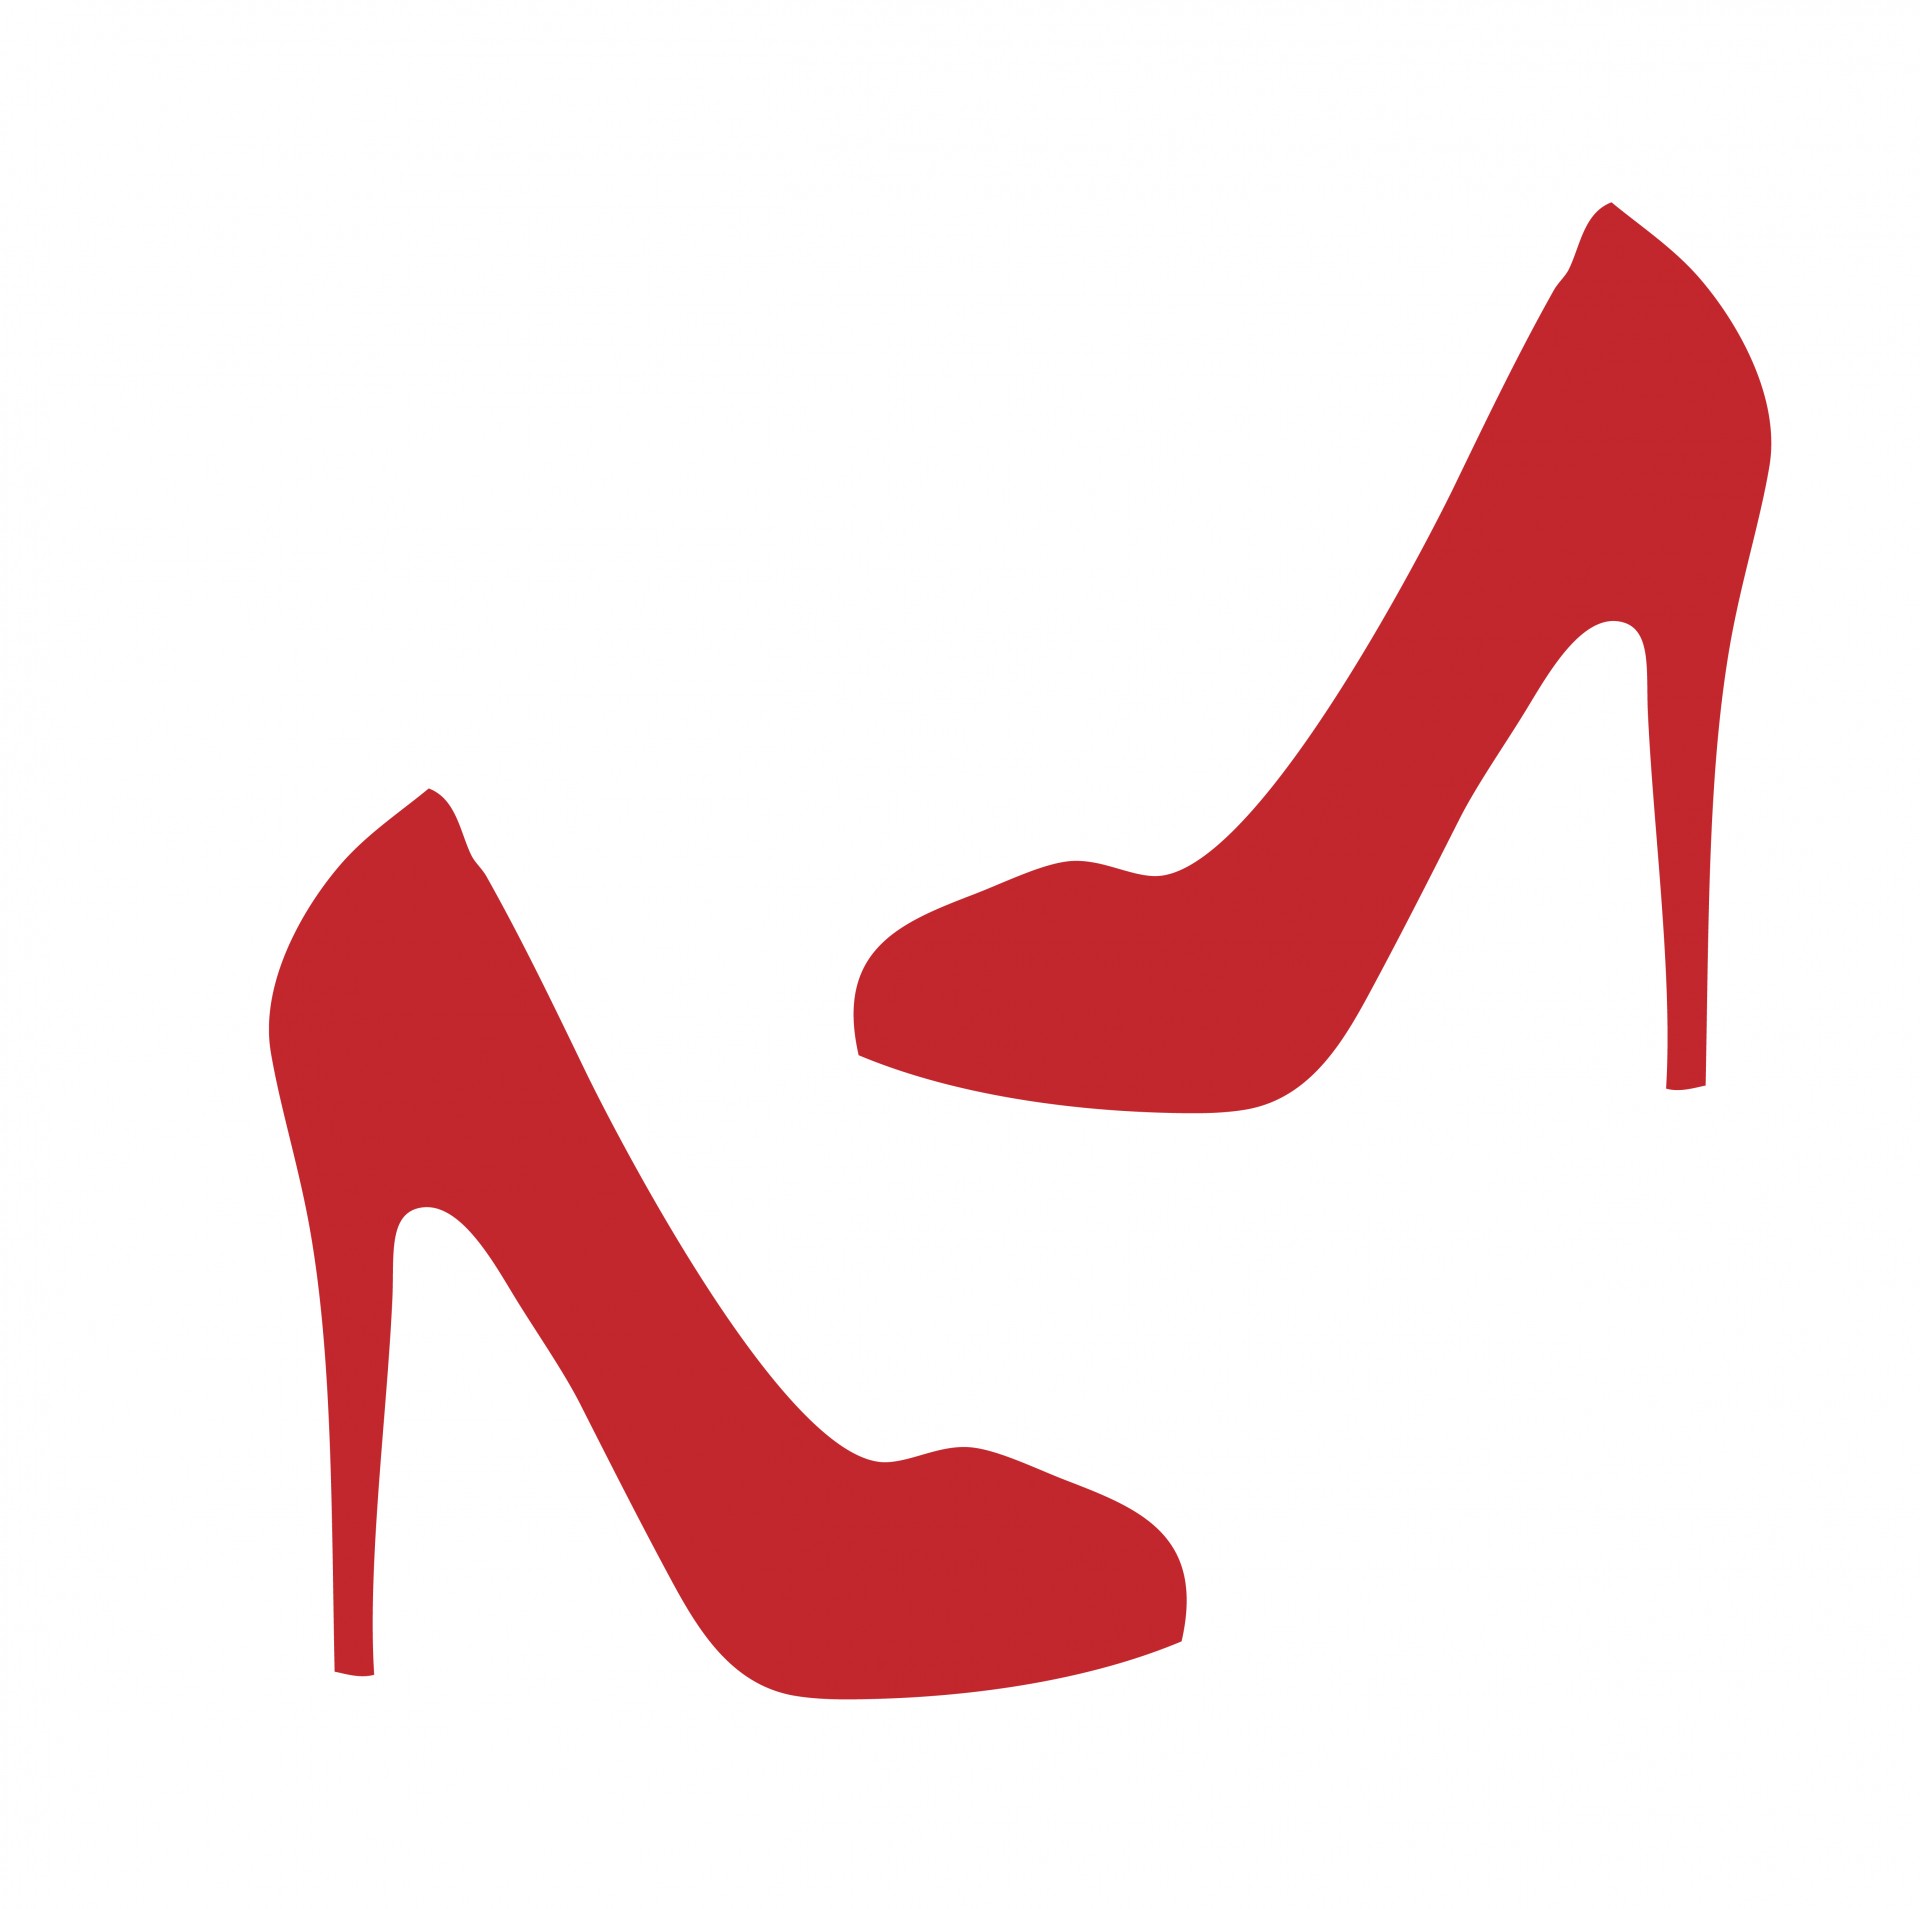 ... High heel shoes (silhouet